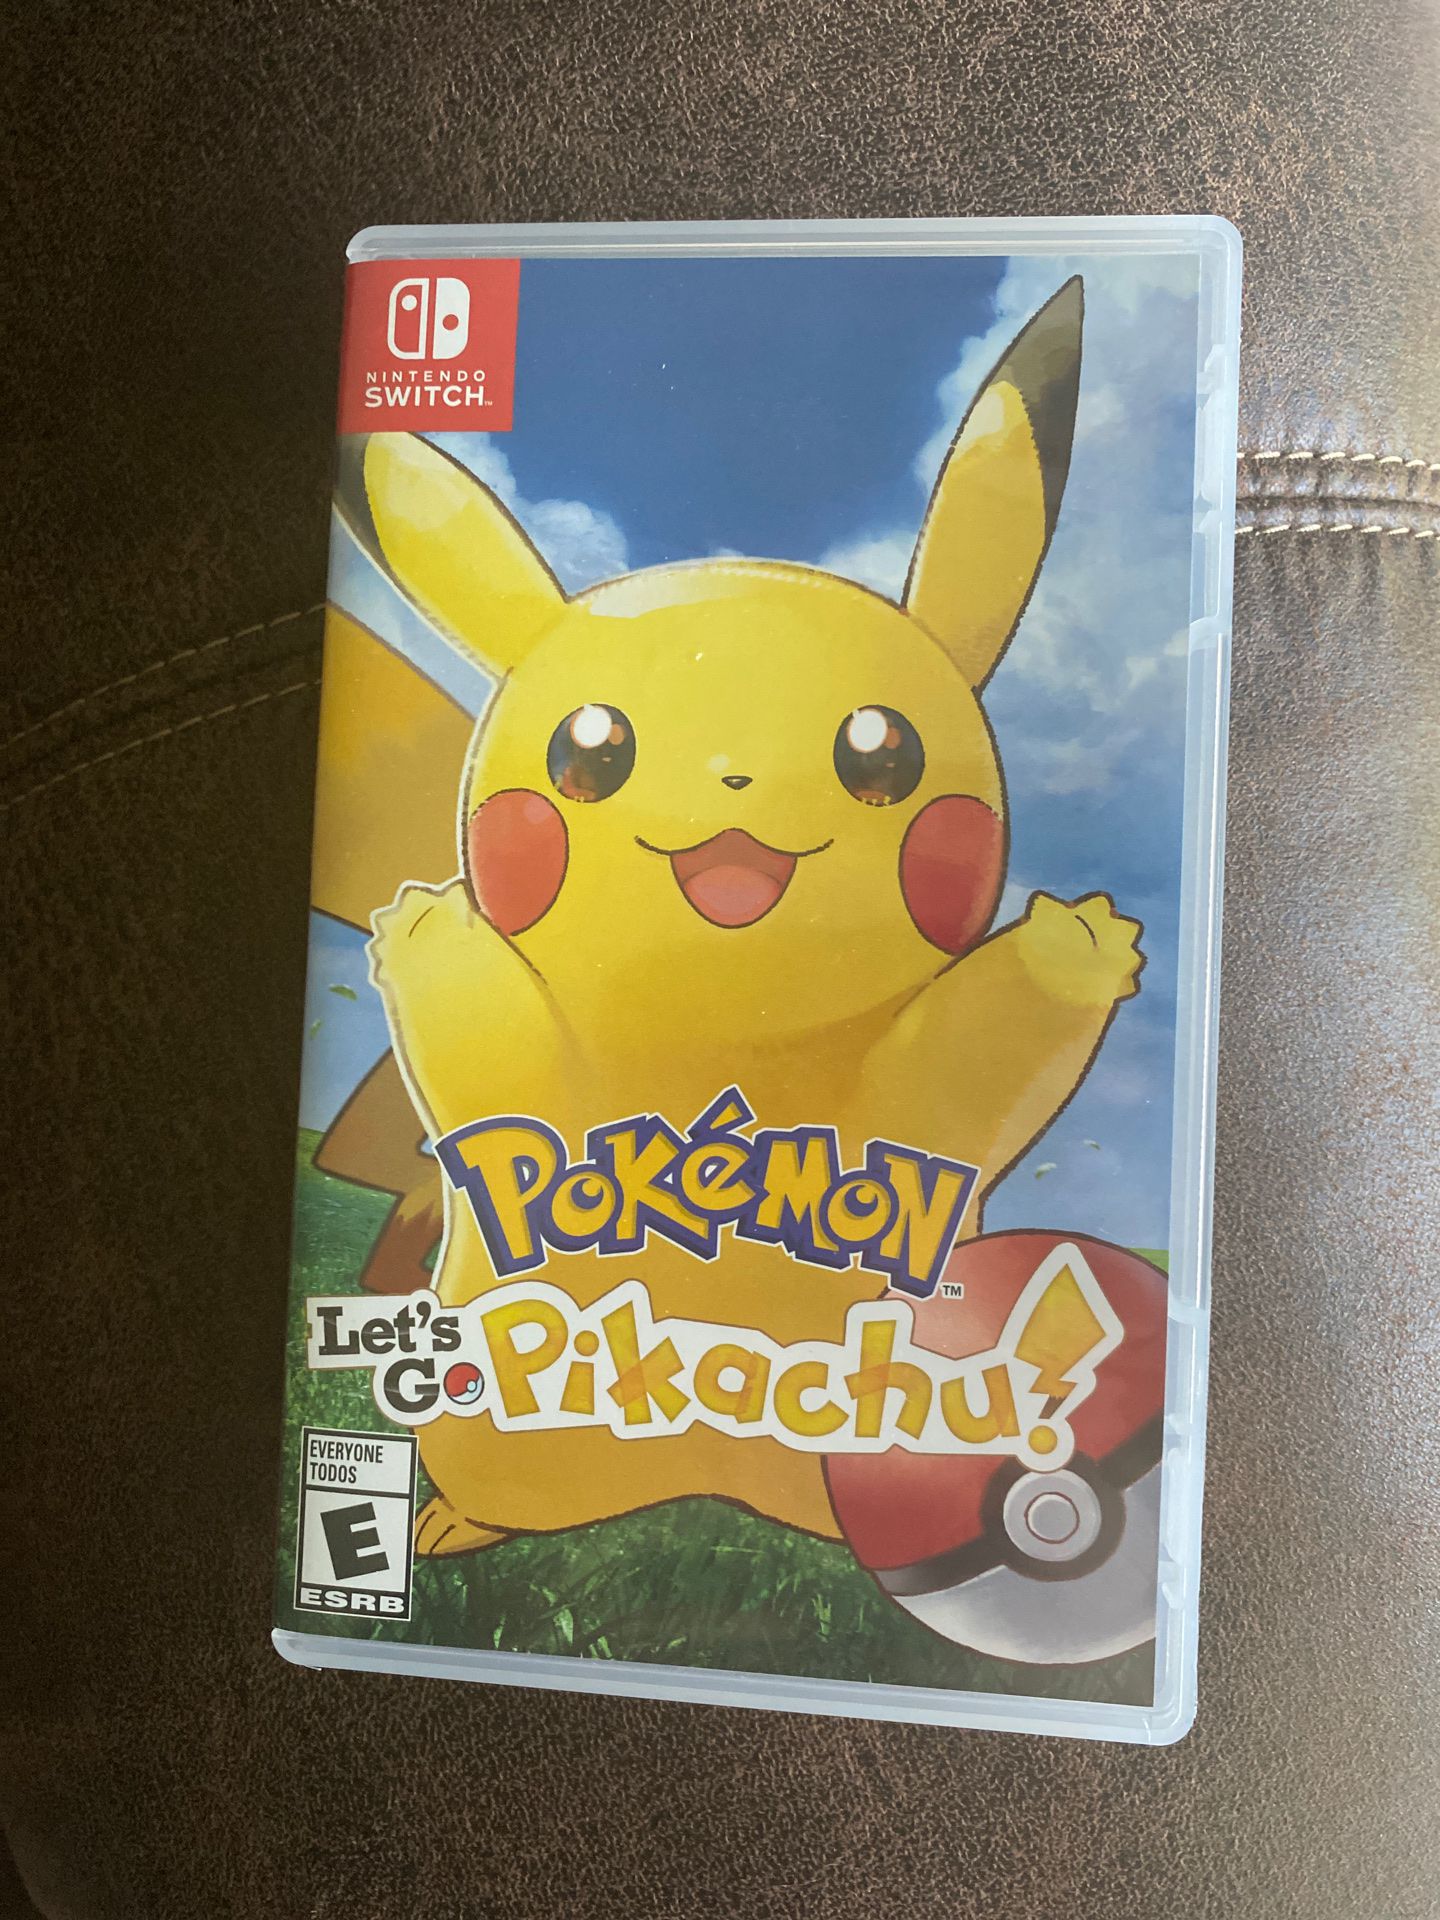 Let’s go pikachu-switch